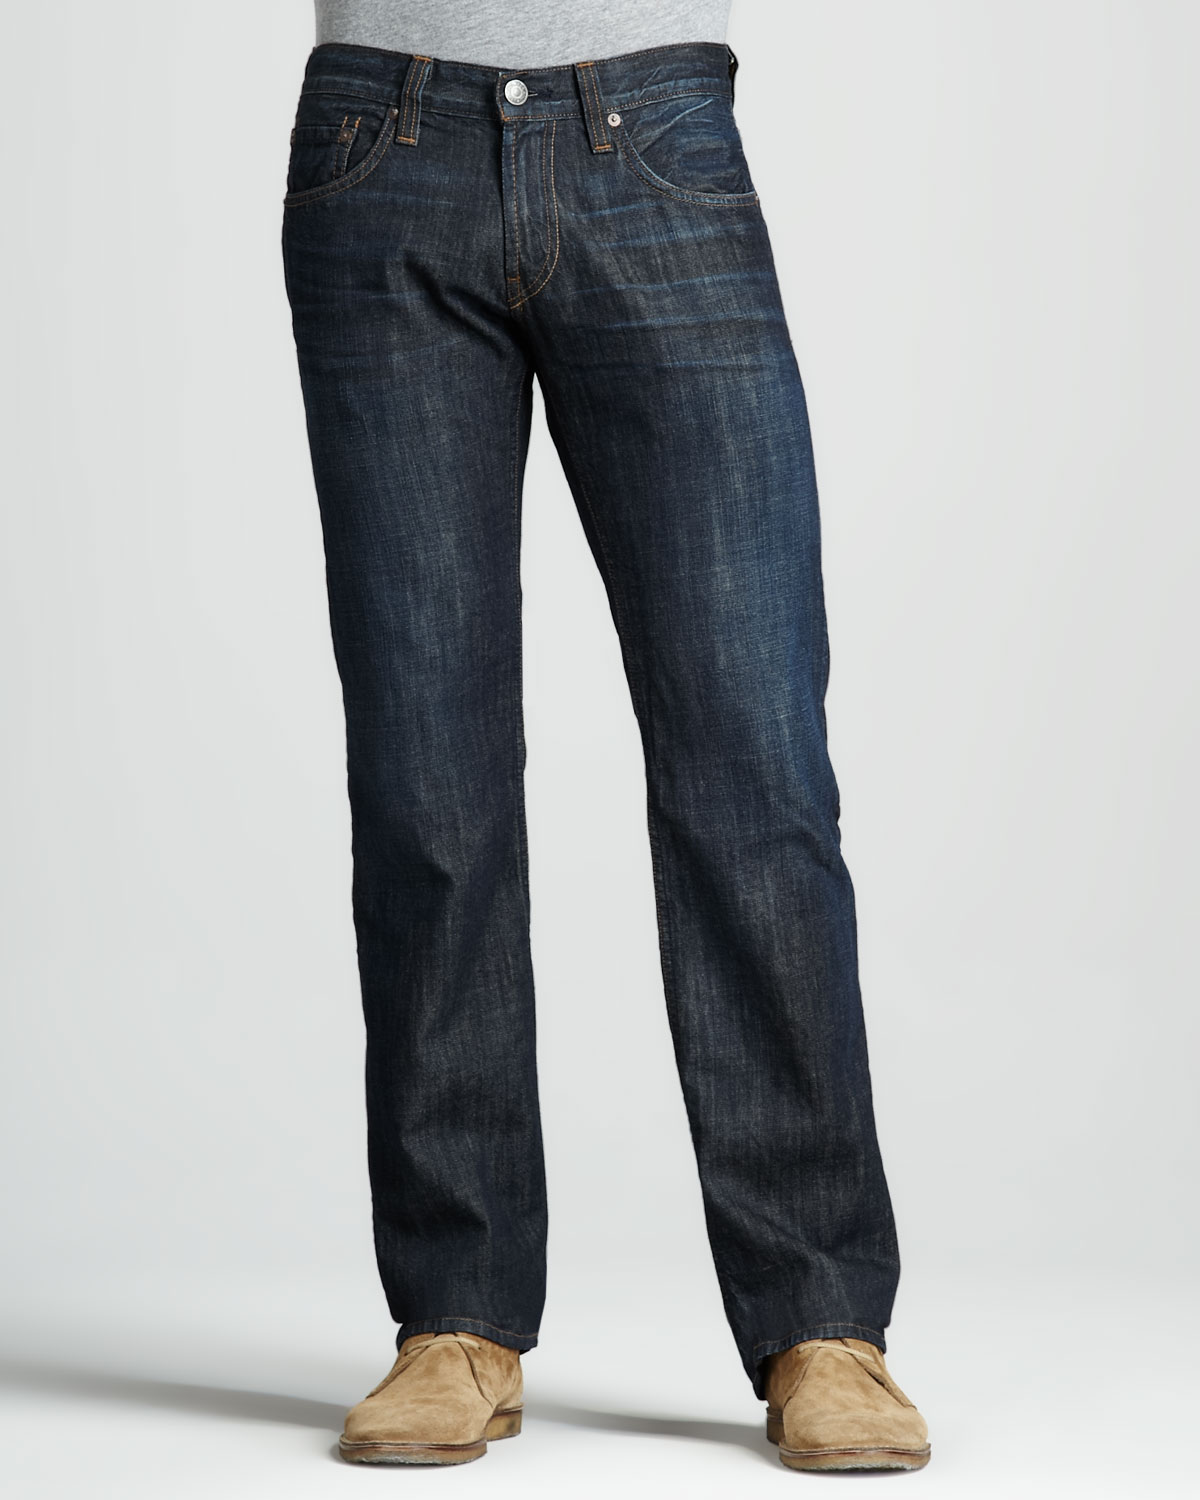 Lyst - J brand Darren Epic Lightweight Jeans in Blue for Men